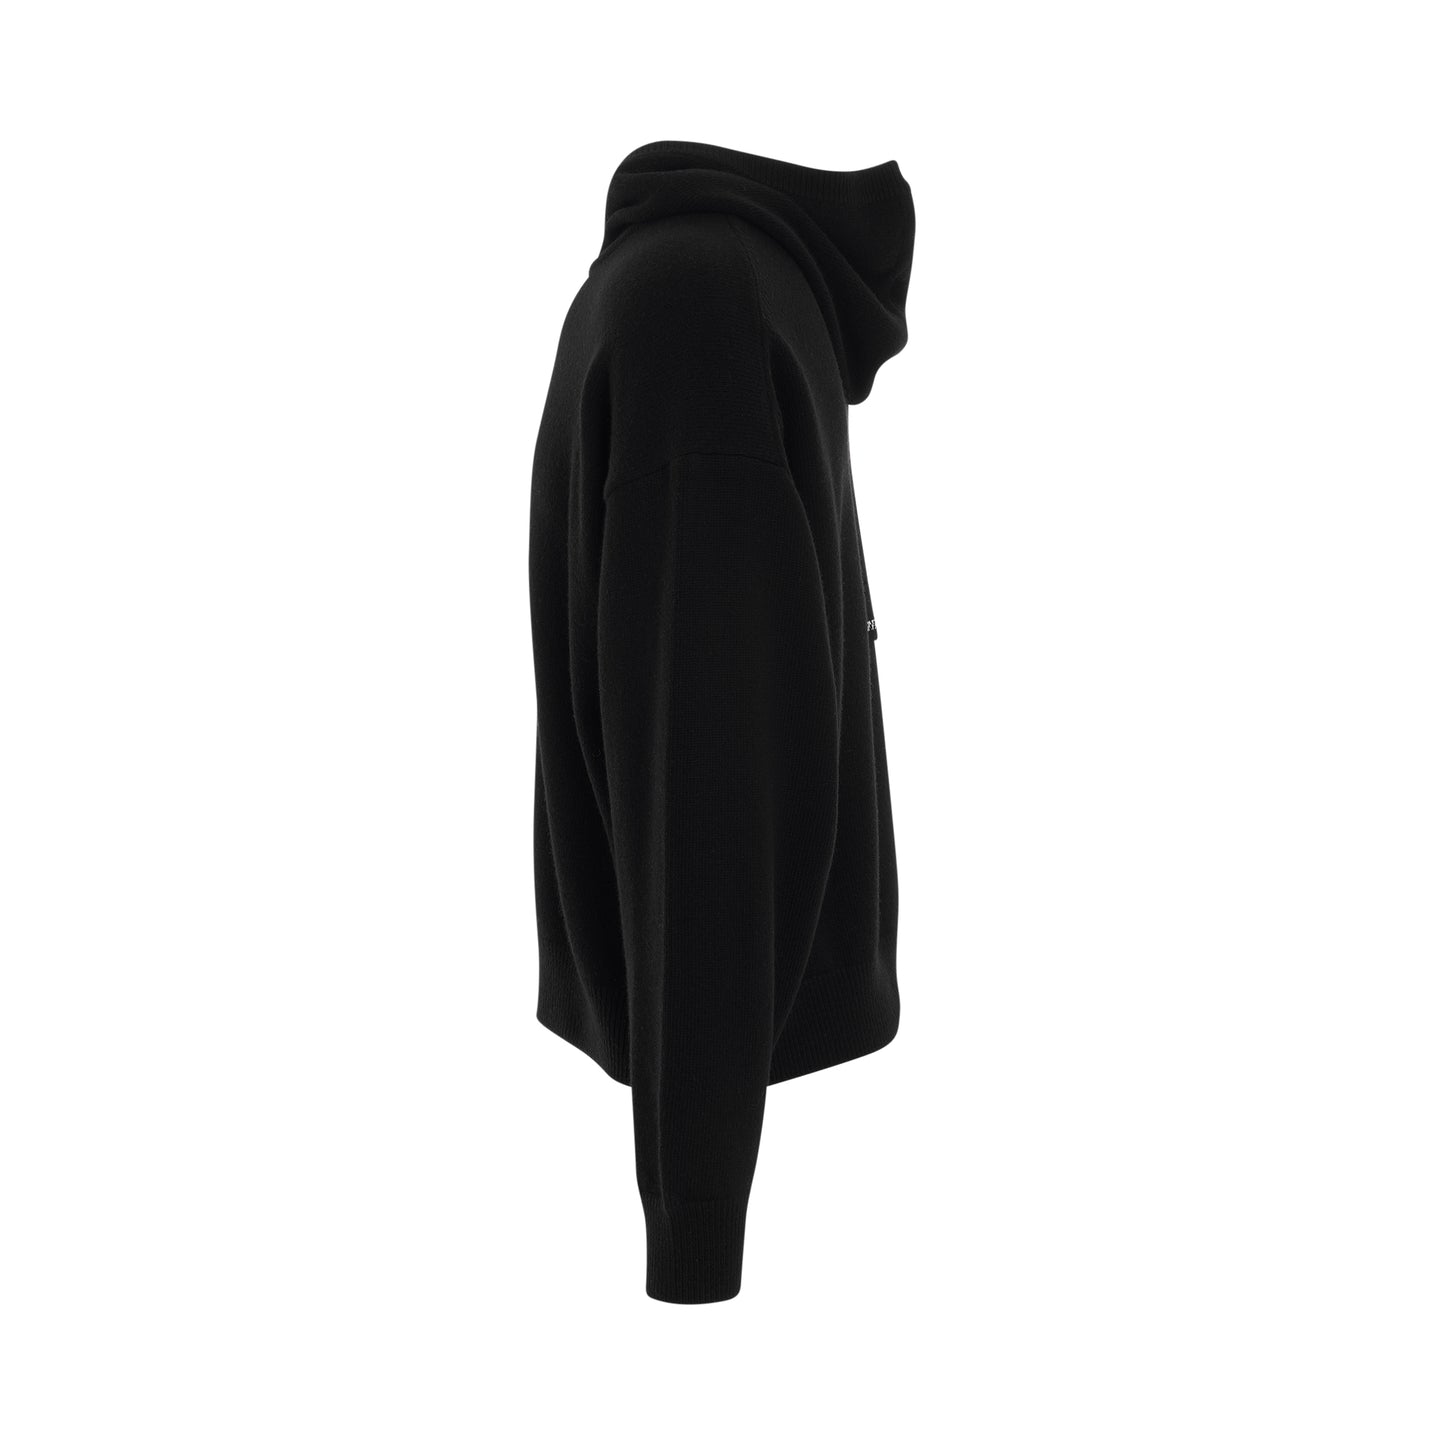 Oversized Basic Knit Hoodie in Black